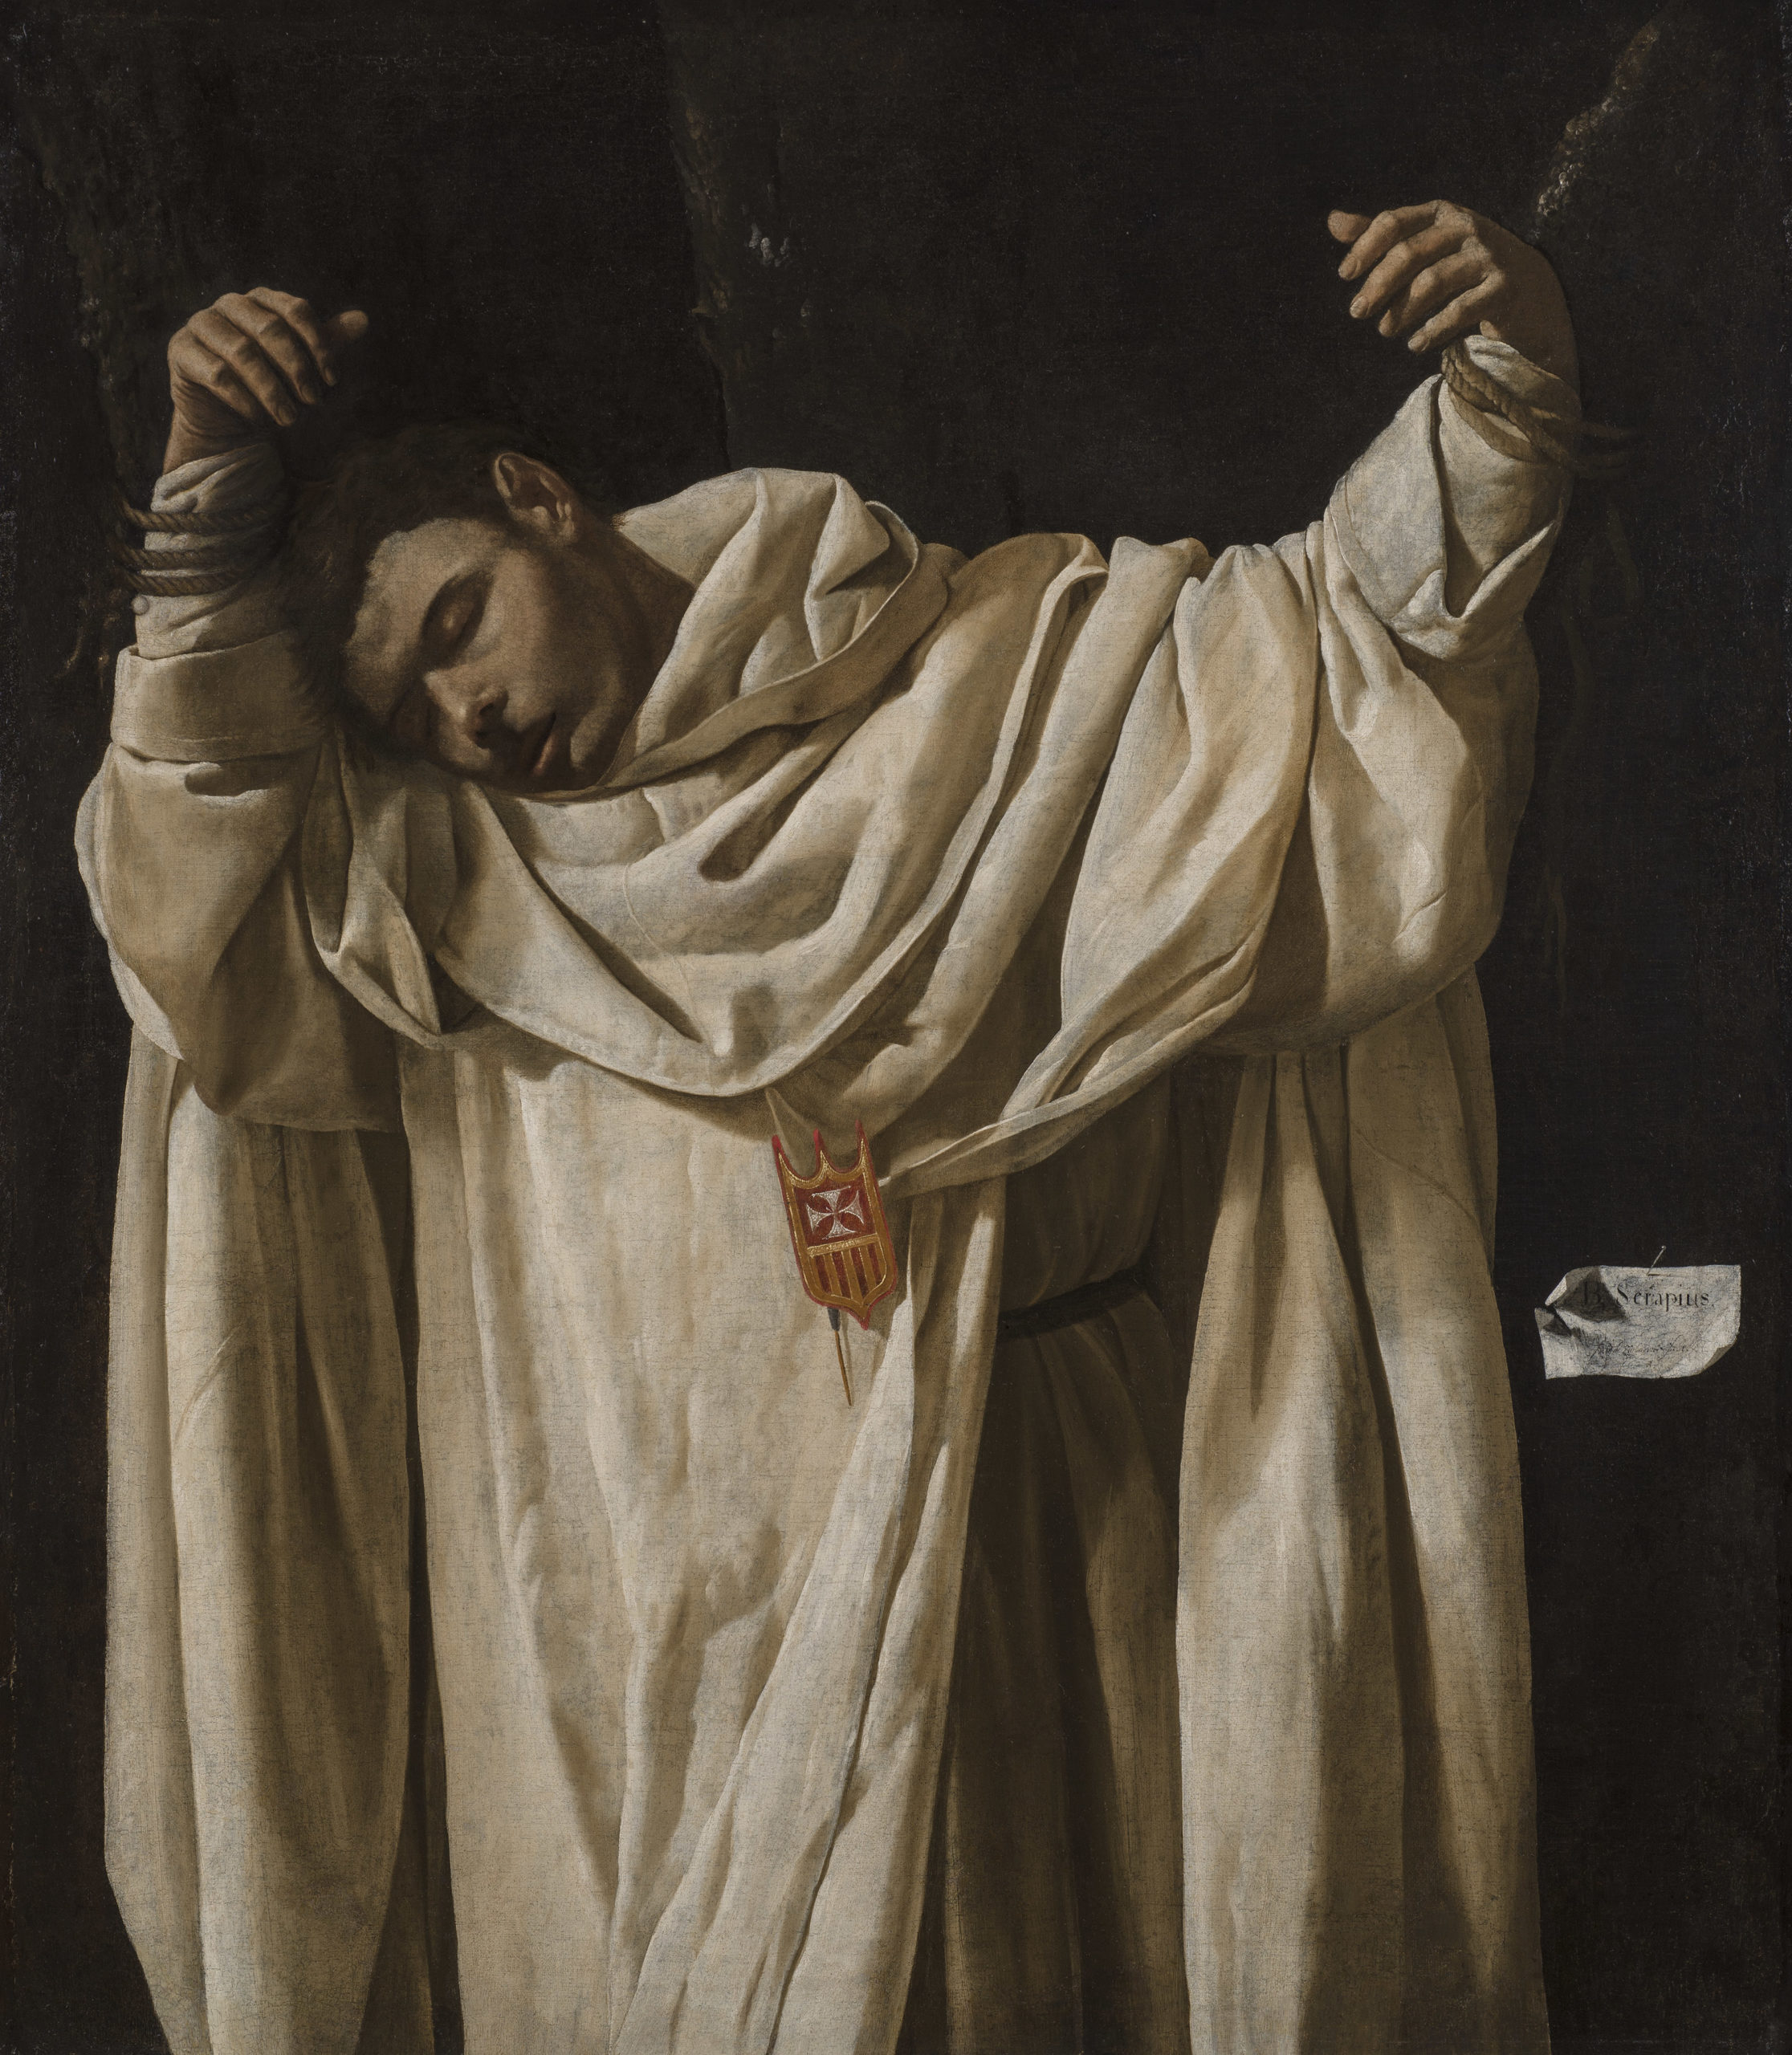 Francisco de Zurbarán, The Martyrdom of Saint Serapion, 1628, 120 x 103 cm, oil on canvas (Wadsworth Atheneum, Hartford, Connecticut)